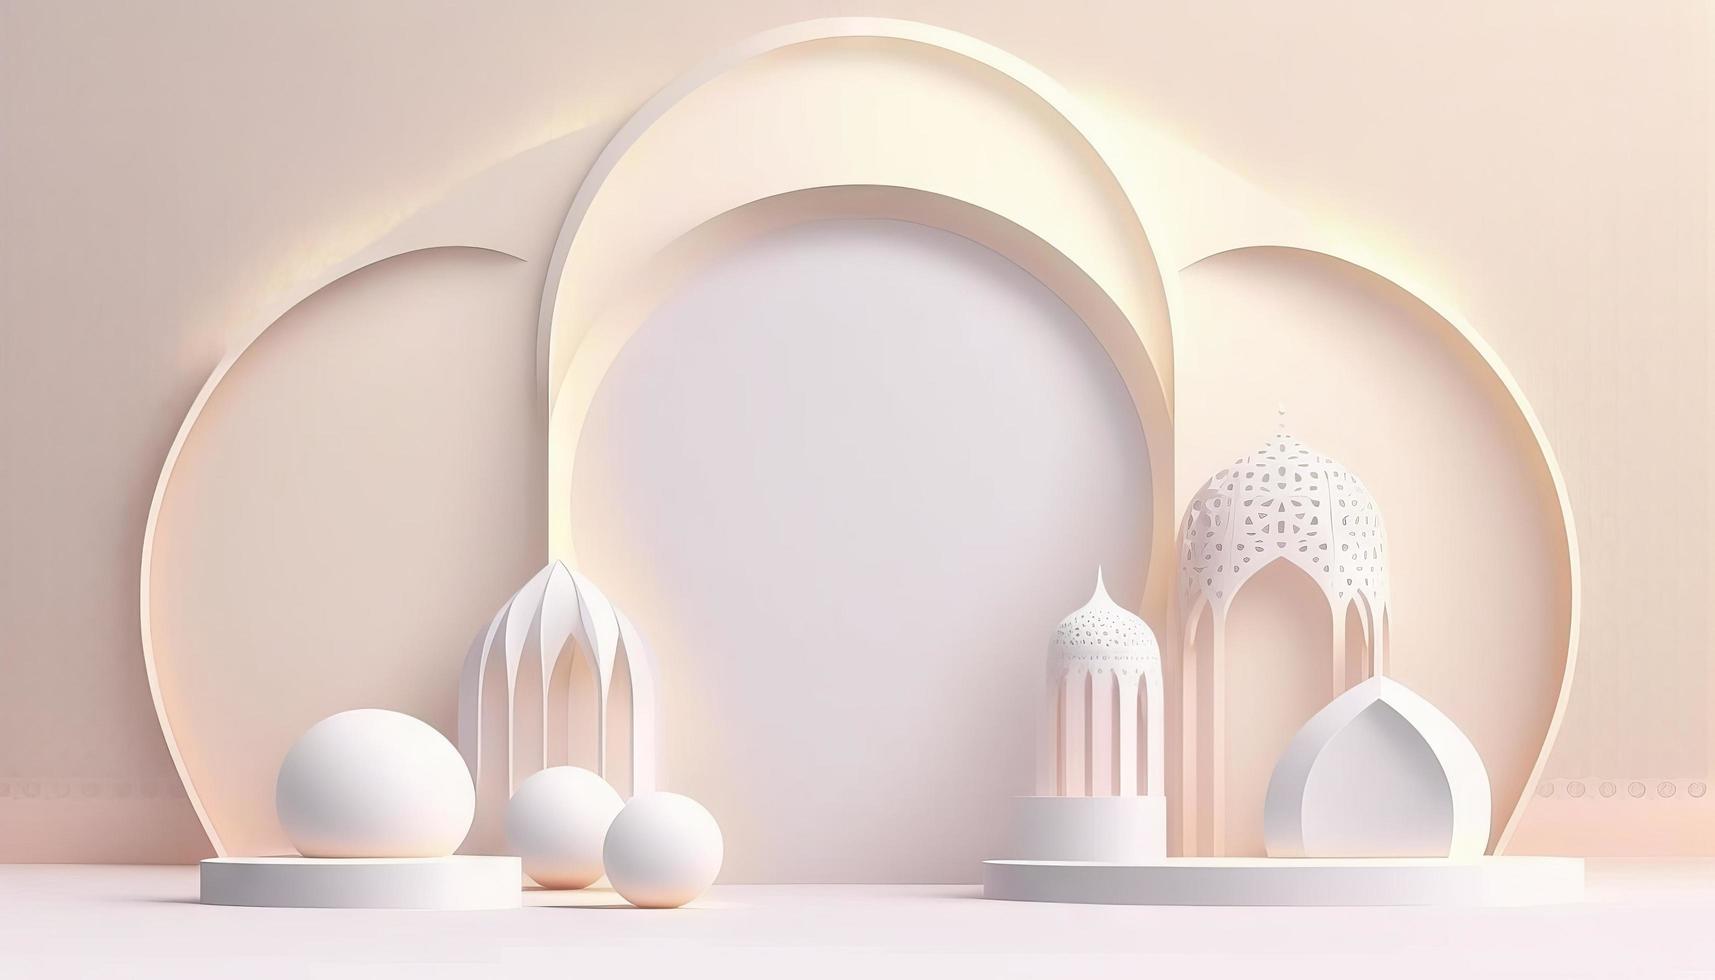 vit mjuk pastell podium islamic bakgrund. Ramadhan prydnad på vit mjuk matta bakgrund. modern abstrakt design mall foto